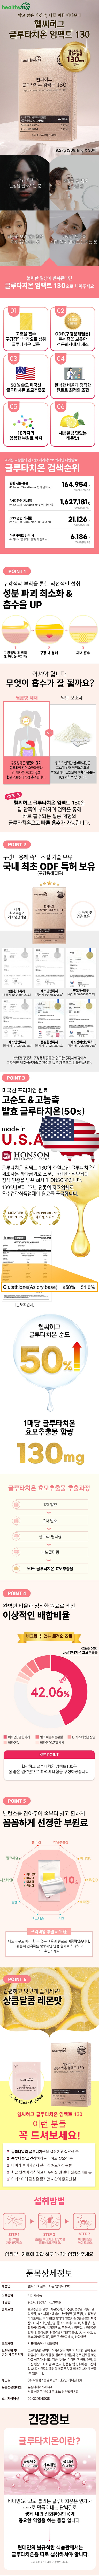 healthyhug_glutathioneIMPACT+set_750.jpg